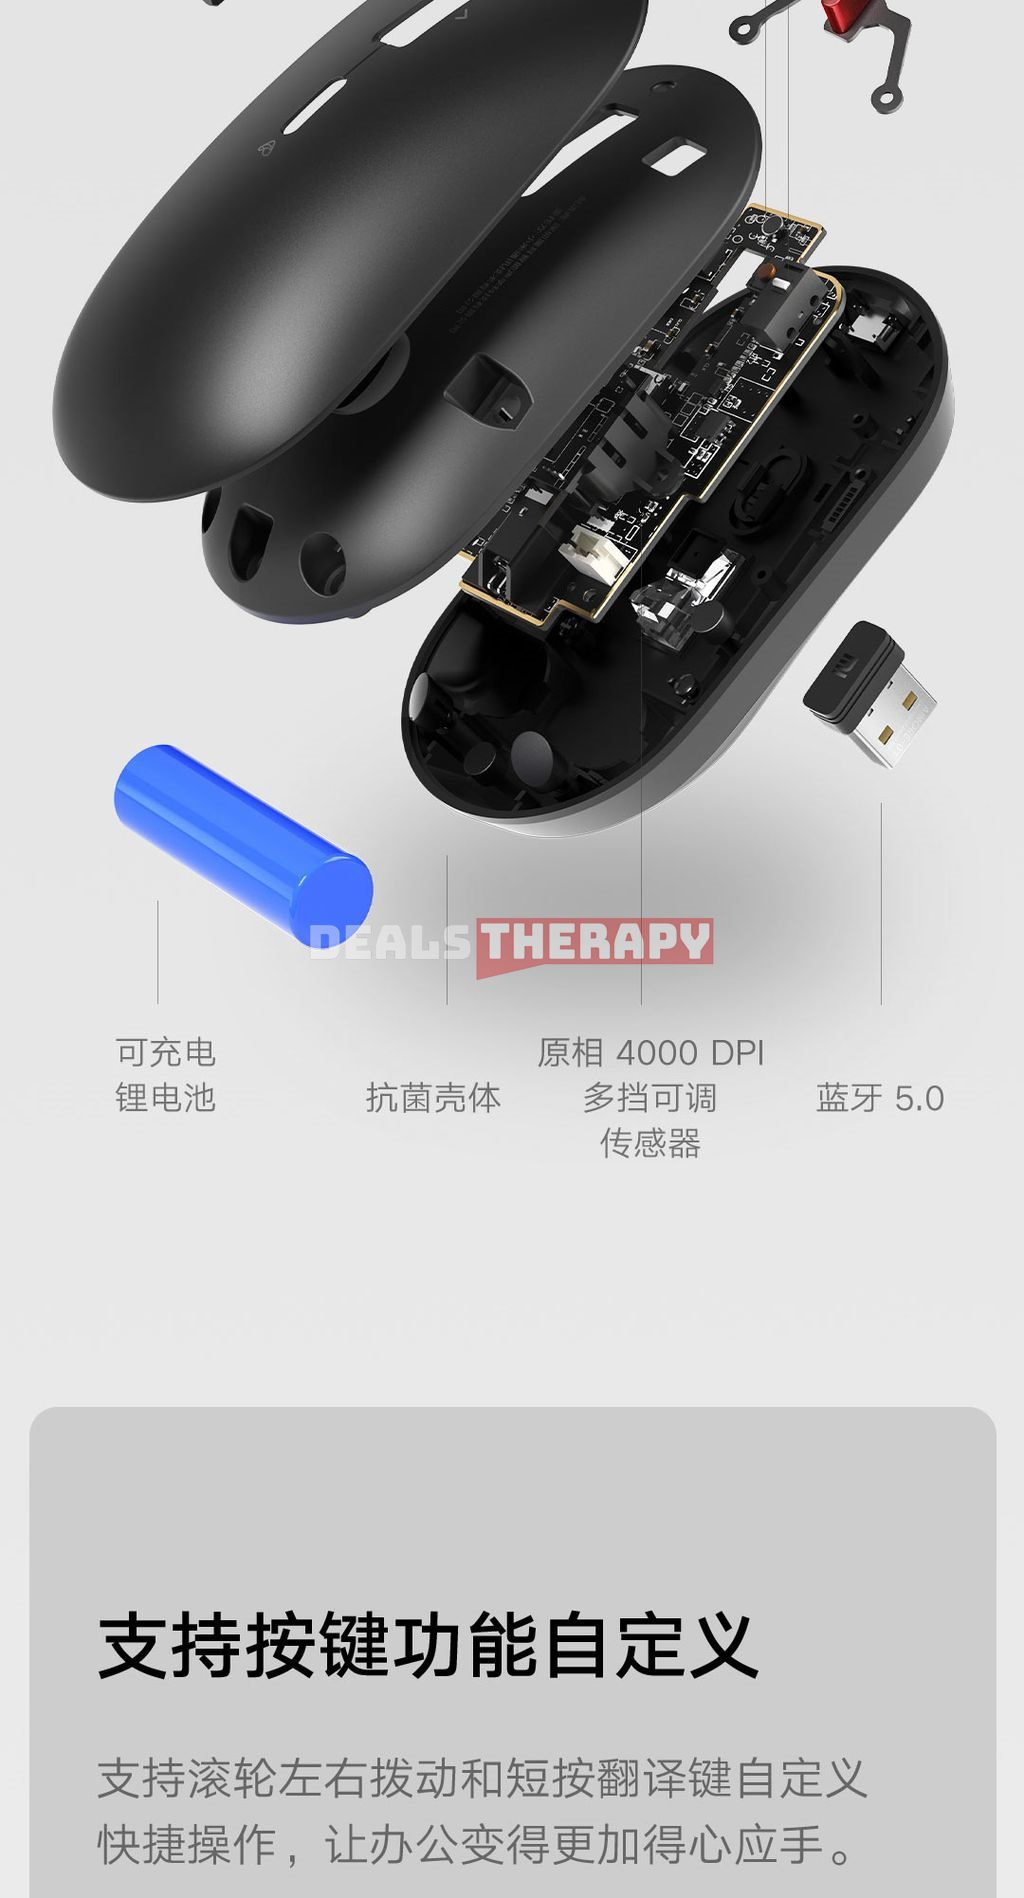 Xiaomi Xiaoai Mouse